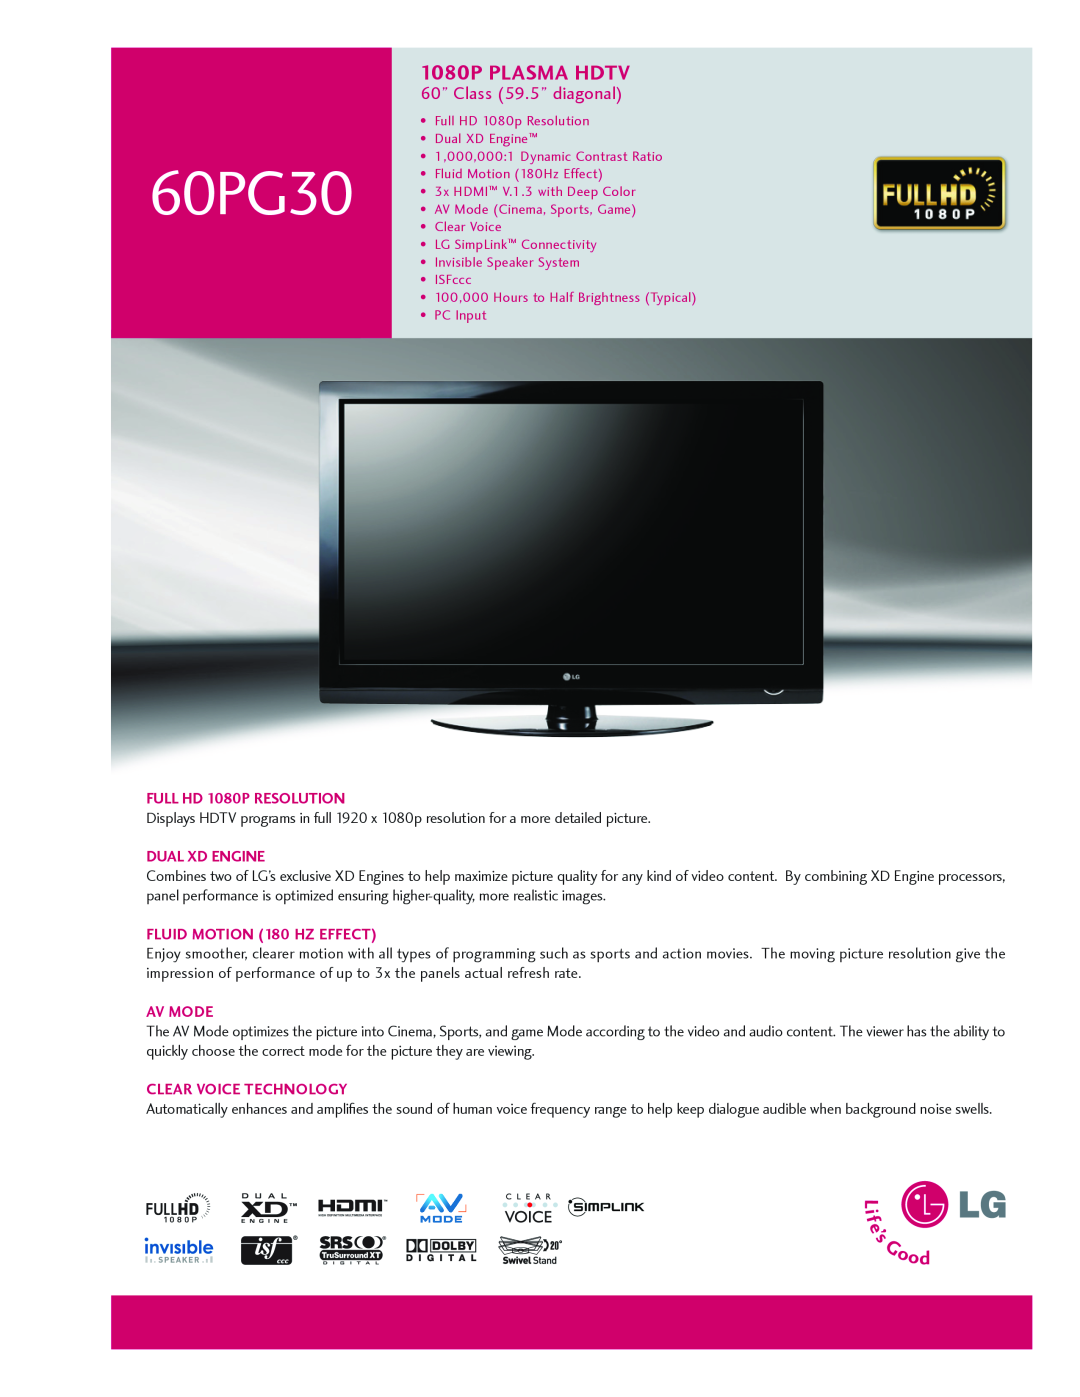 Philips 60PG30 manual 1080P PLASMA HDTV 60” Class 59.5” diagonal, FULL HD 1080P RESOLUTION, Dual Xd Engine, Av Mode 